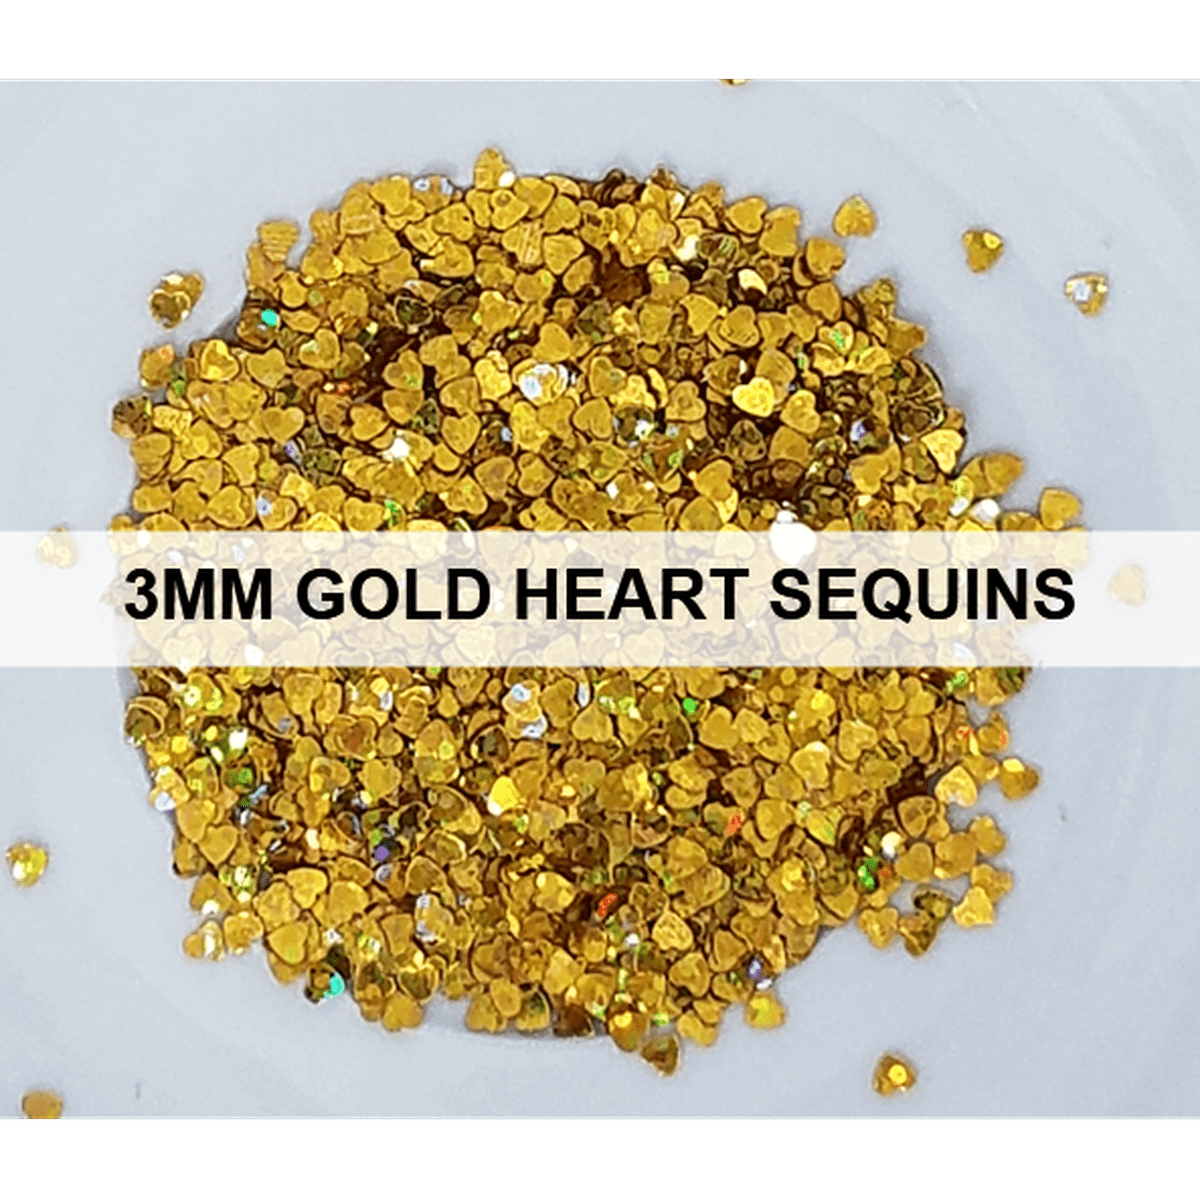 3mm Gold Heart Sequins - Kat Scrappiness